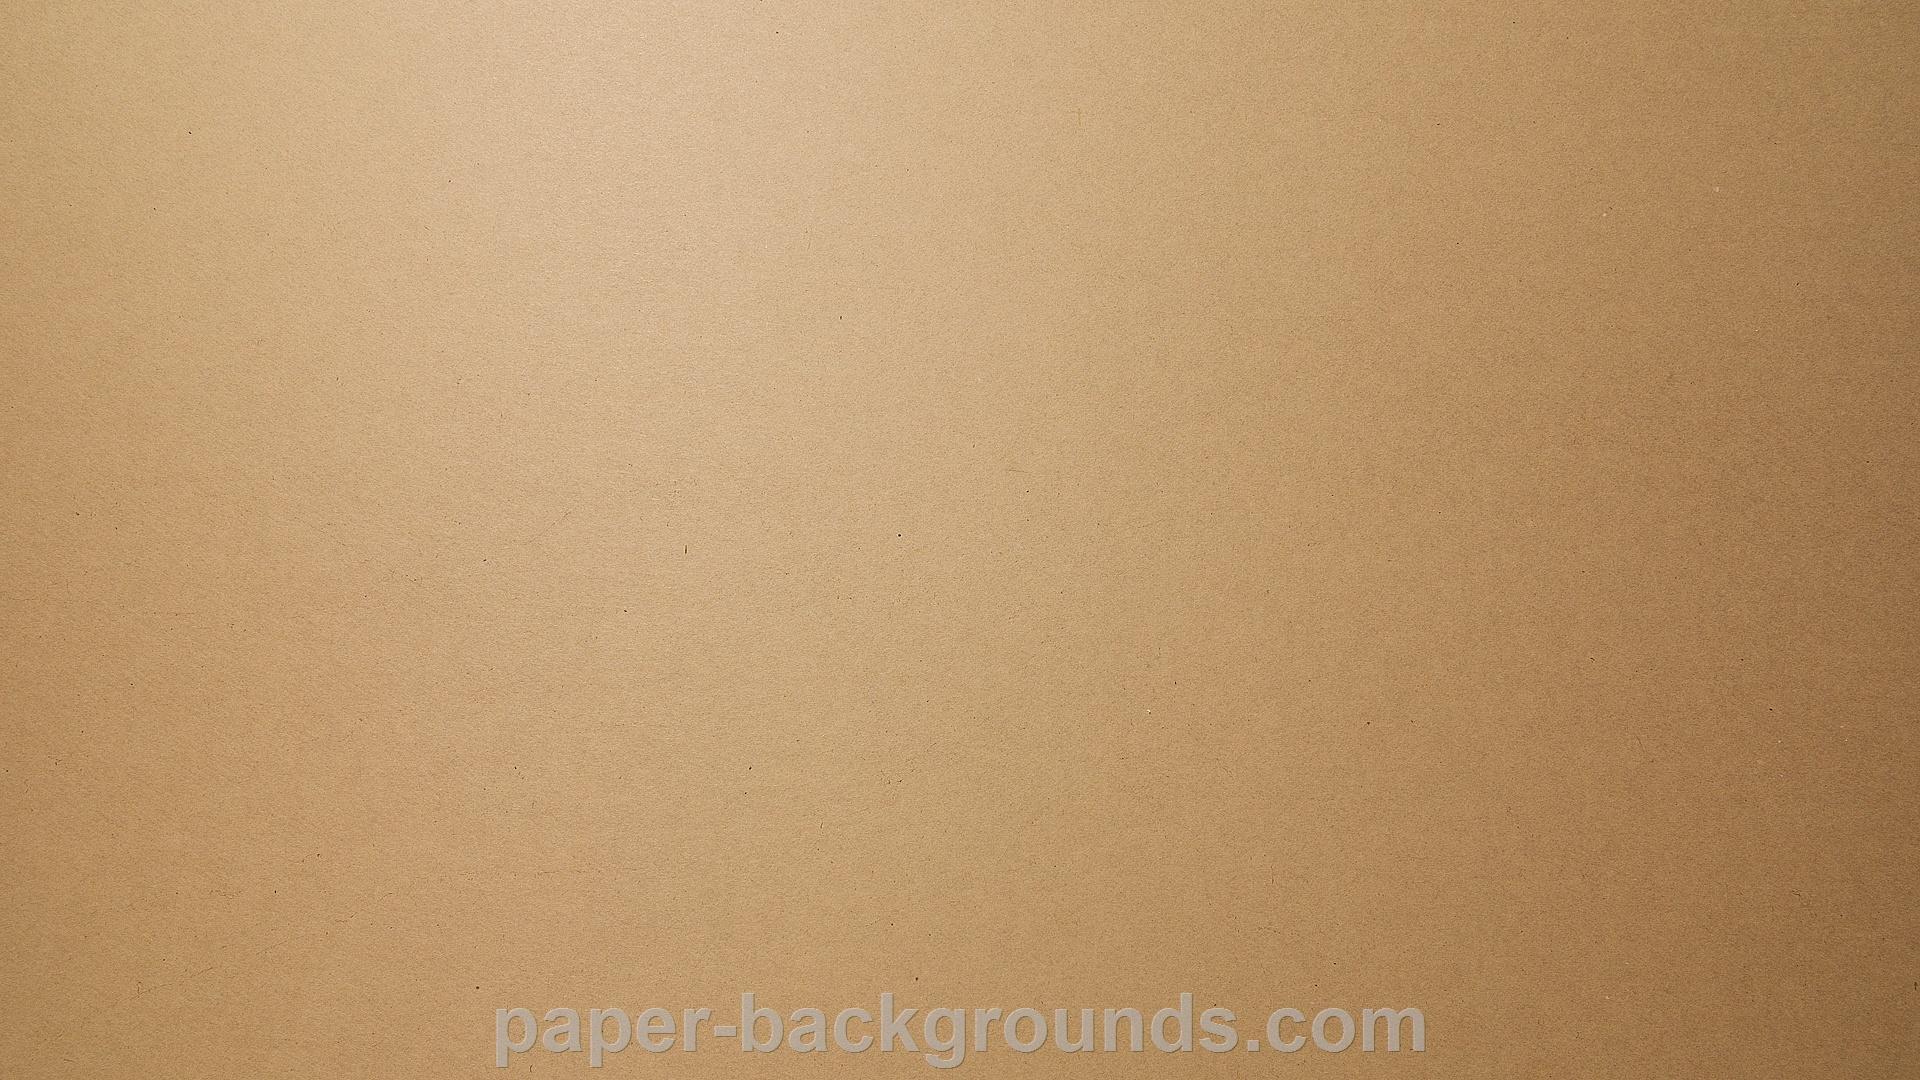 Cardboard Background. Cardboard